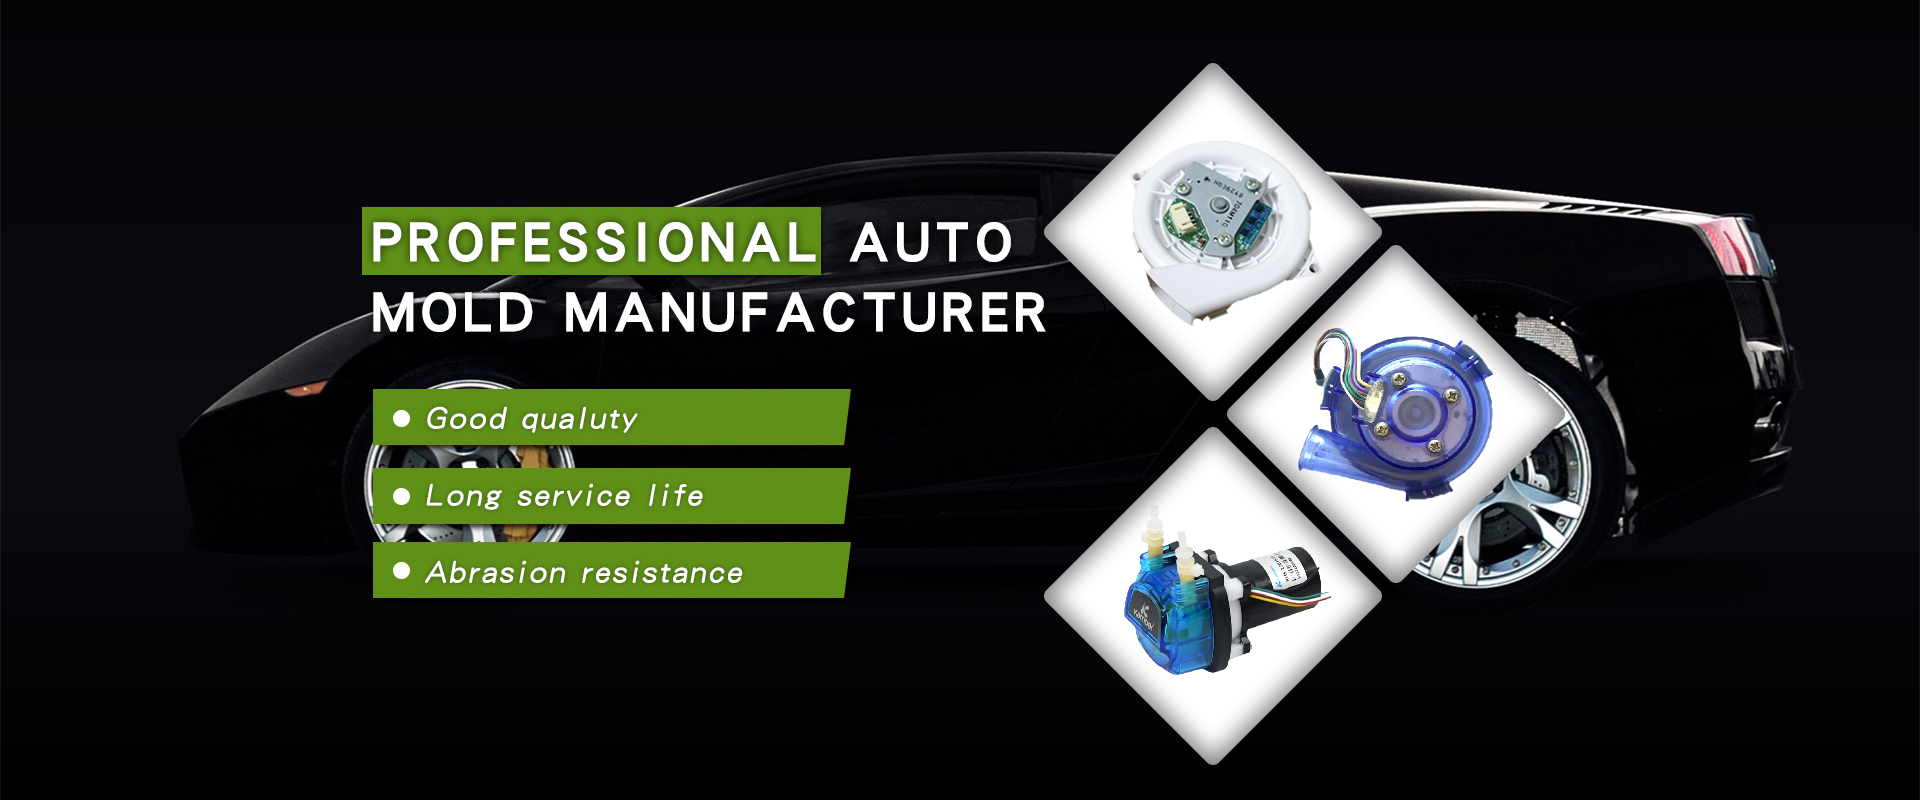 Professional auto mold manufacturer